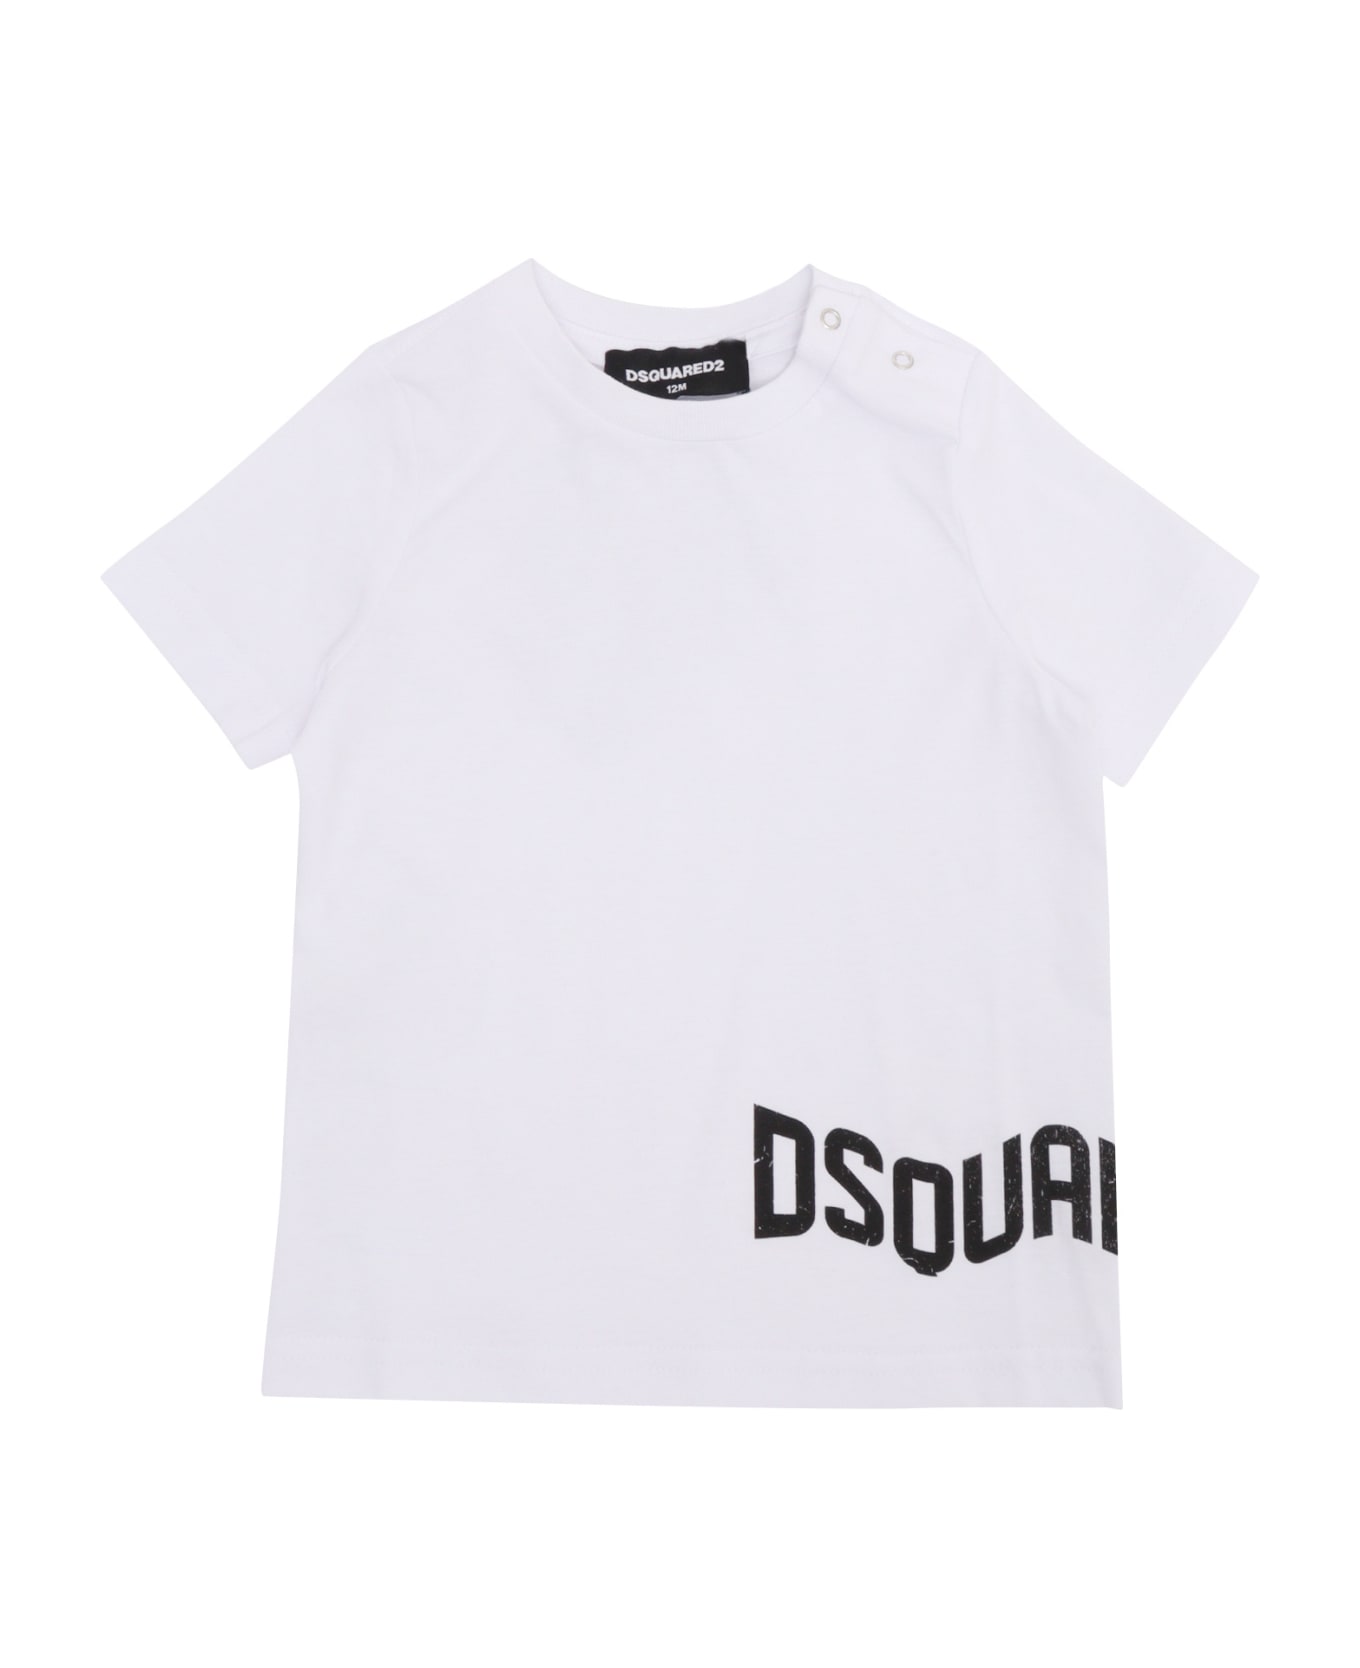 Dsquared2 D-squared2 Child T-shirt - WHITE